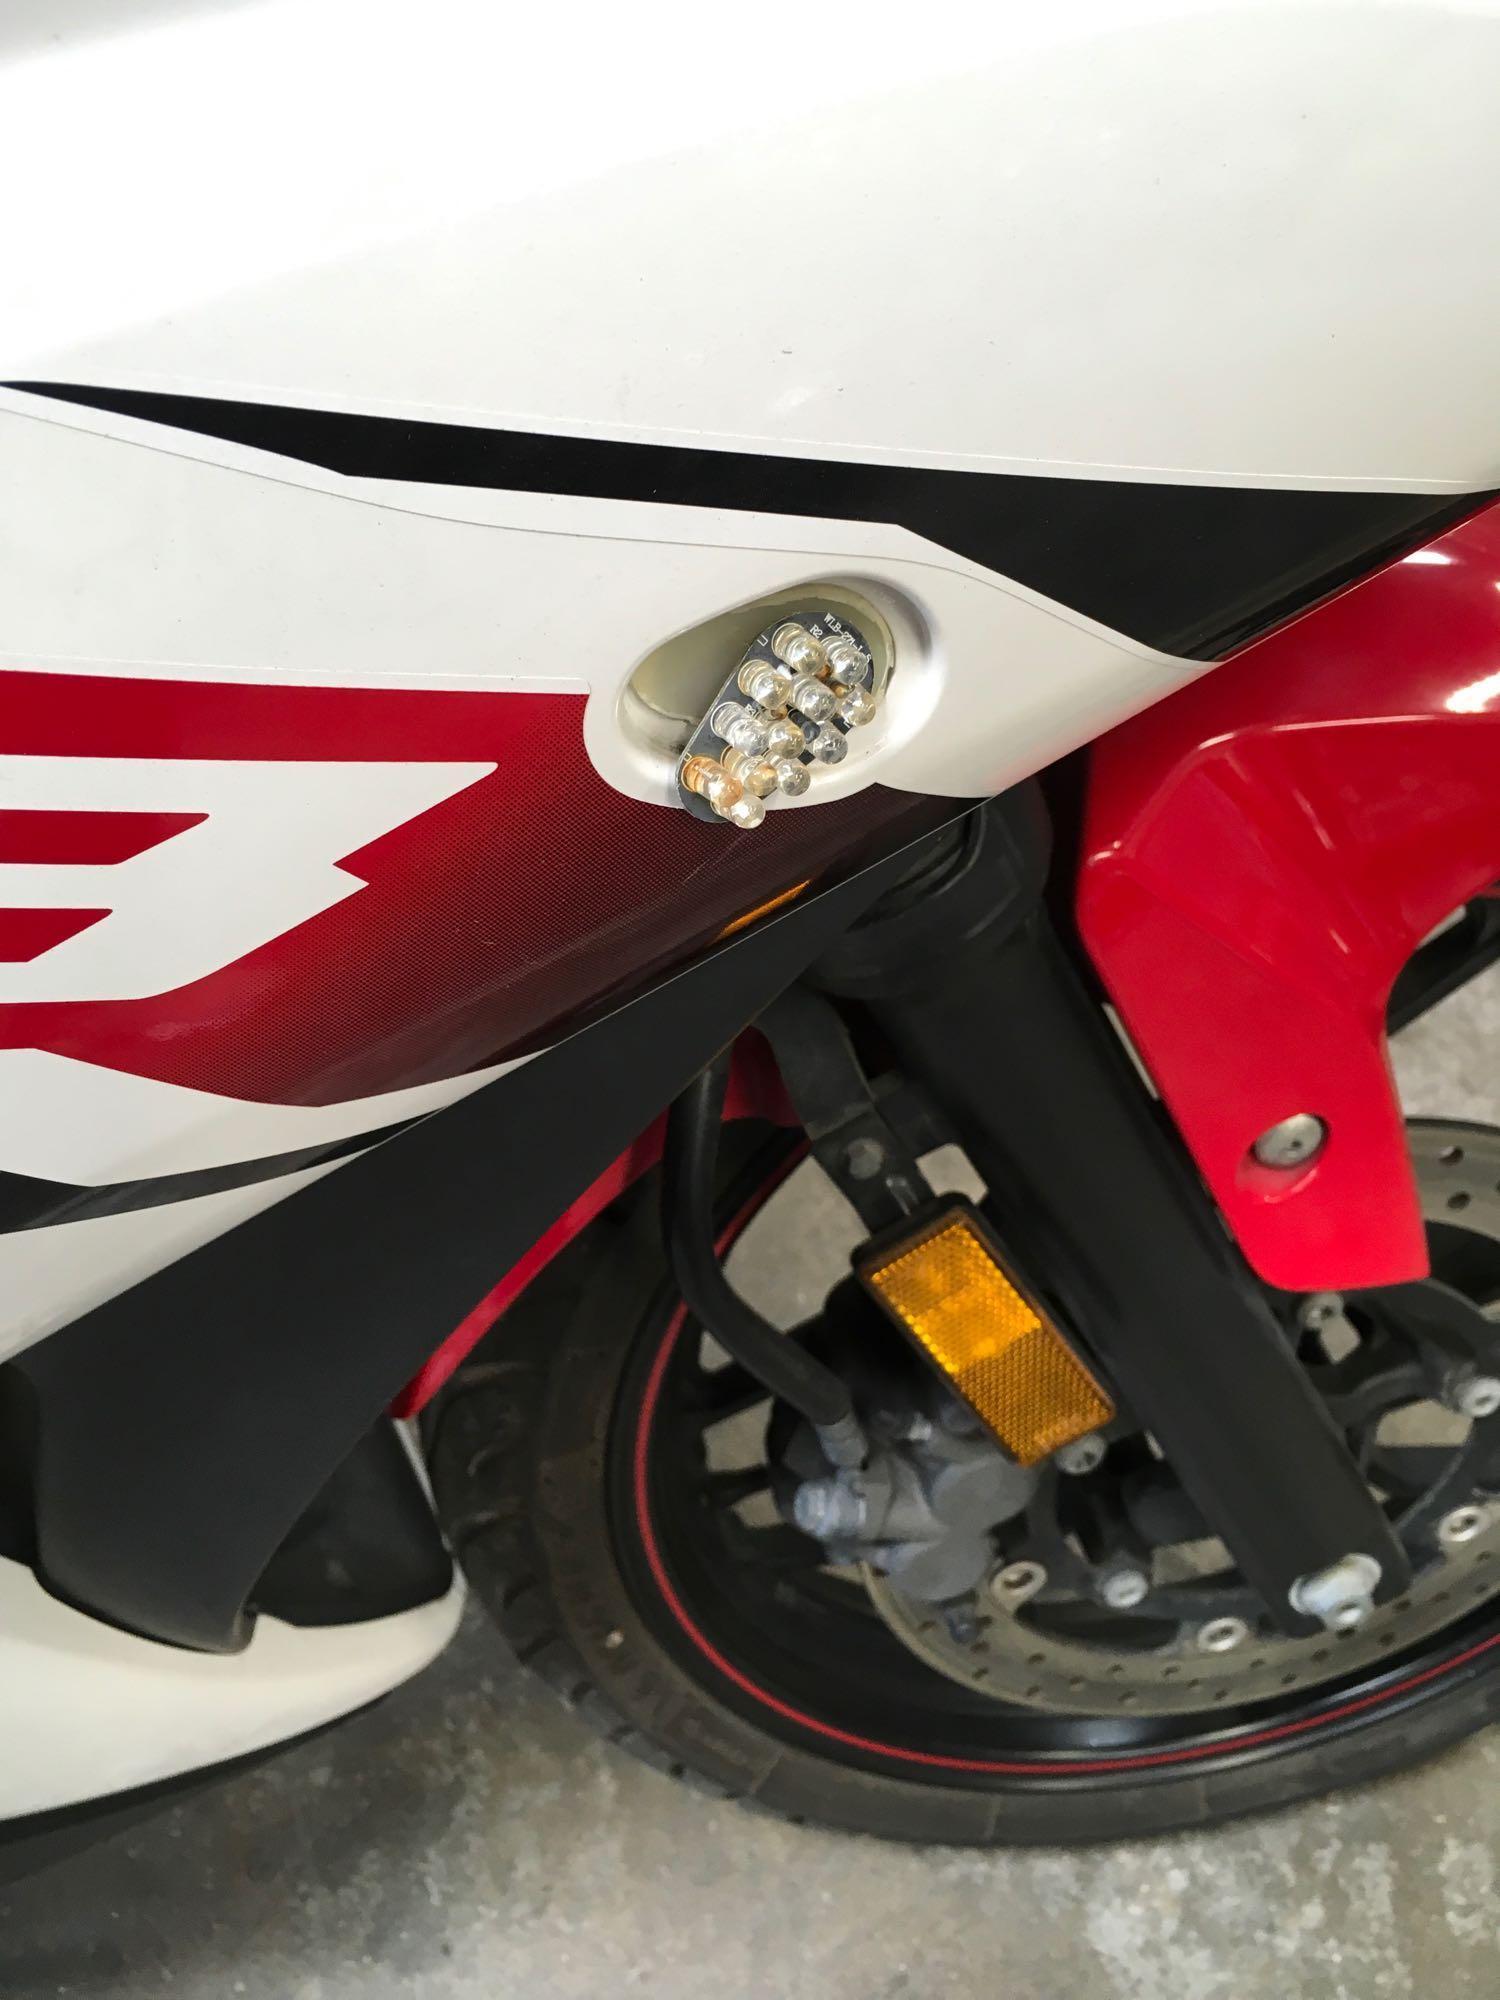 2015 Yamaha R350 Motorcycle